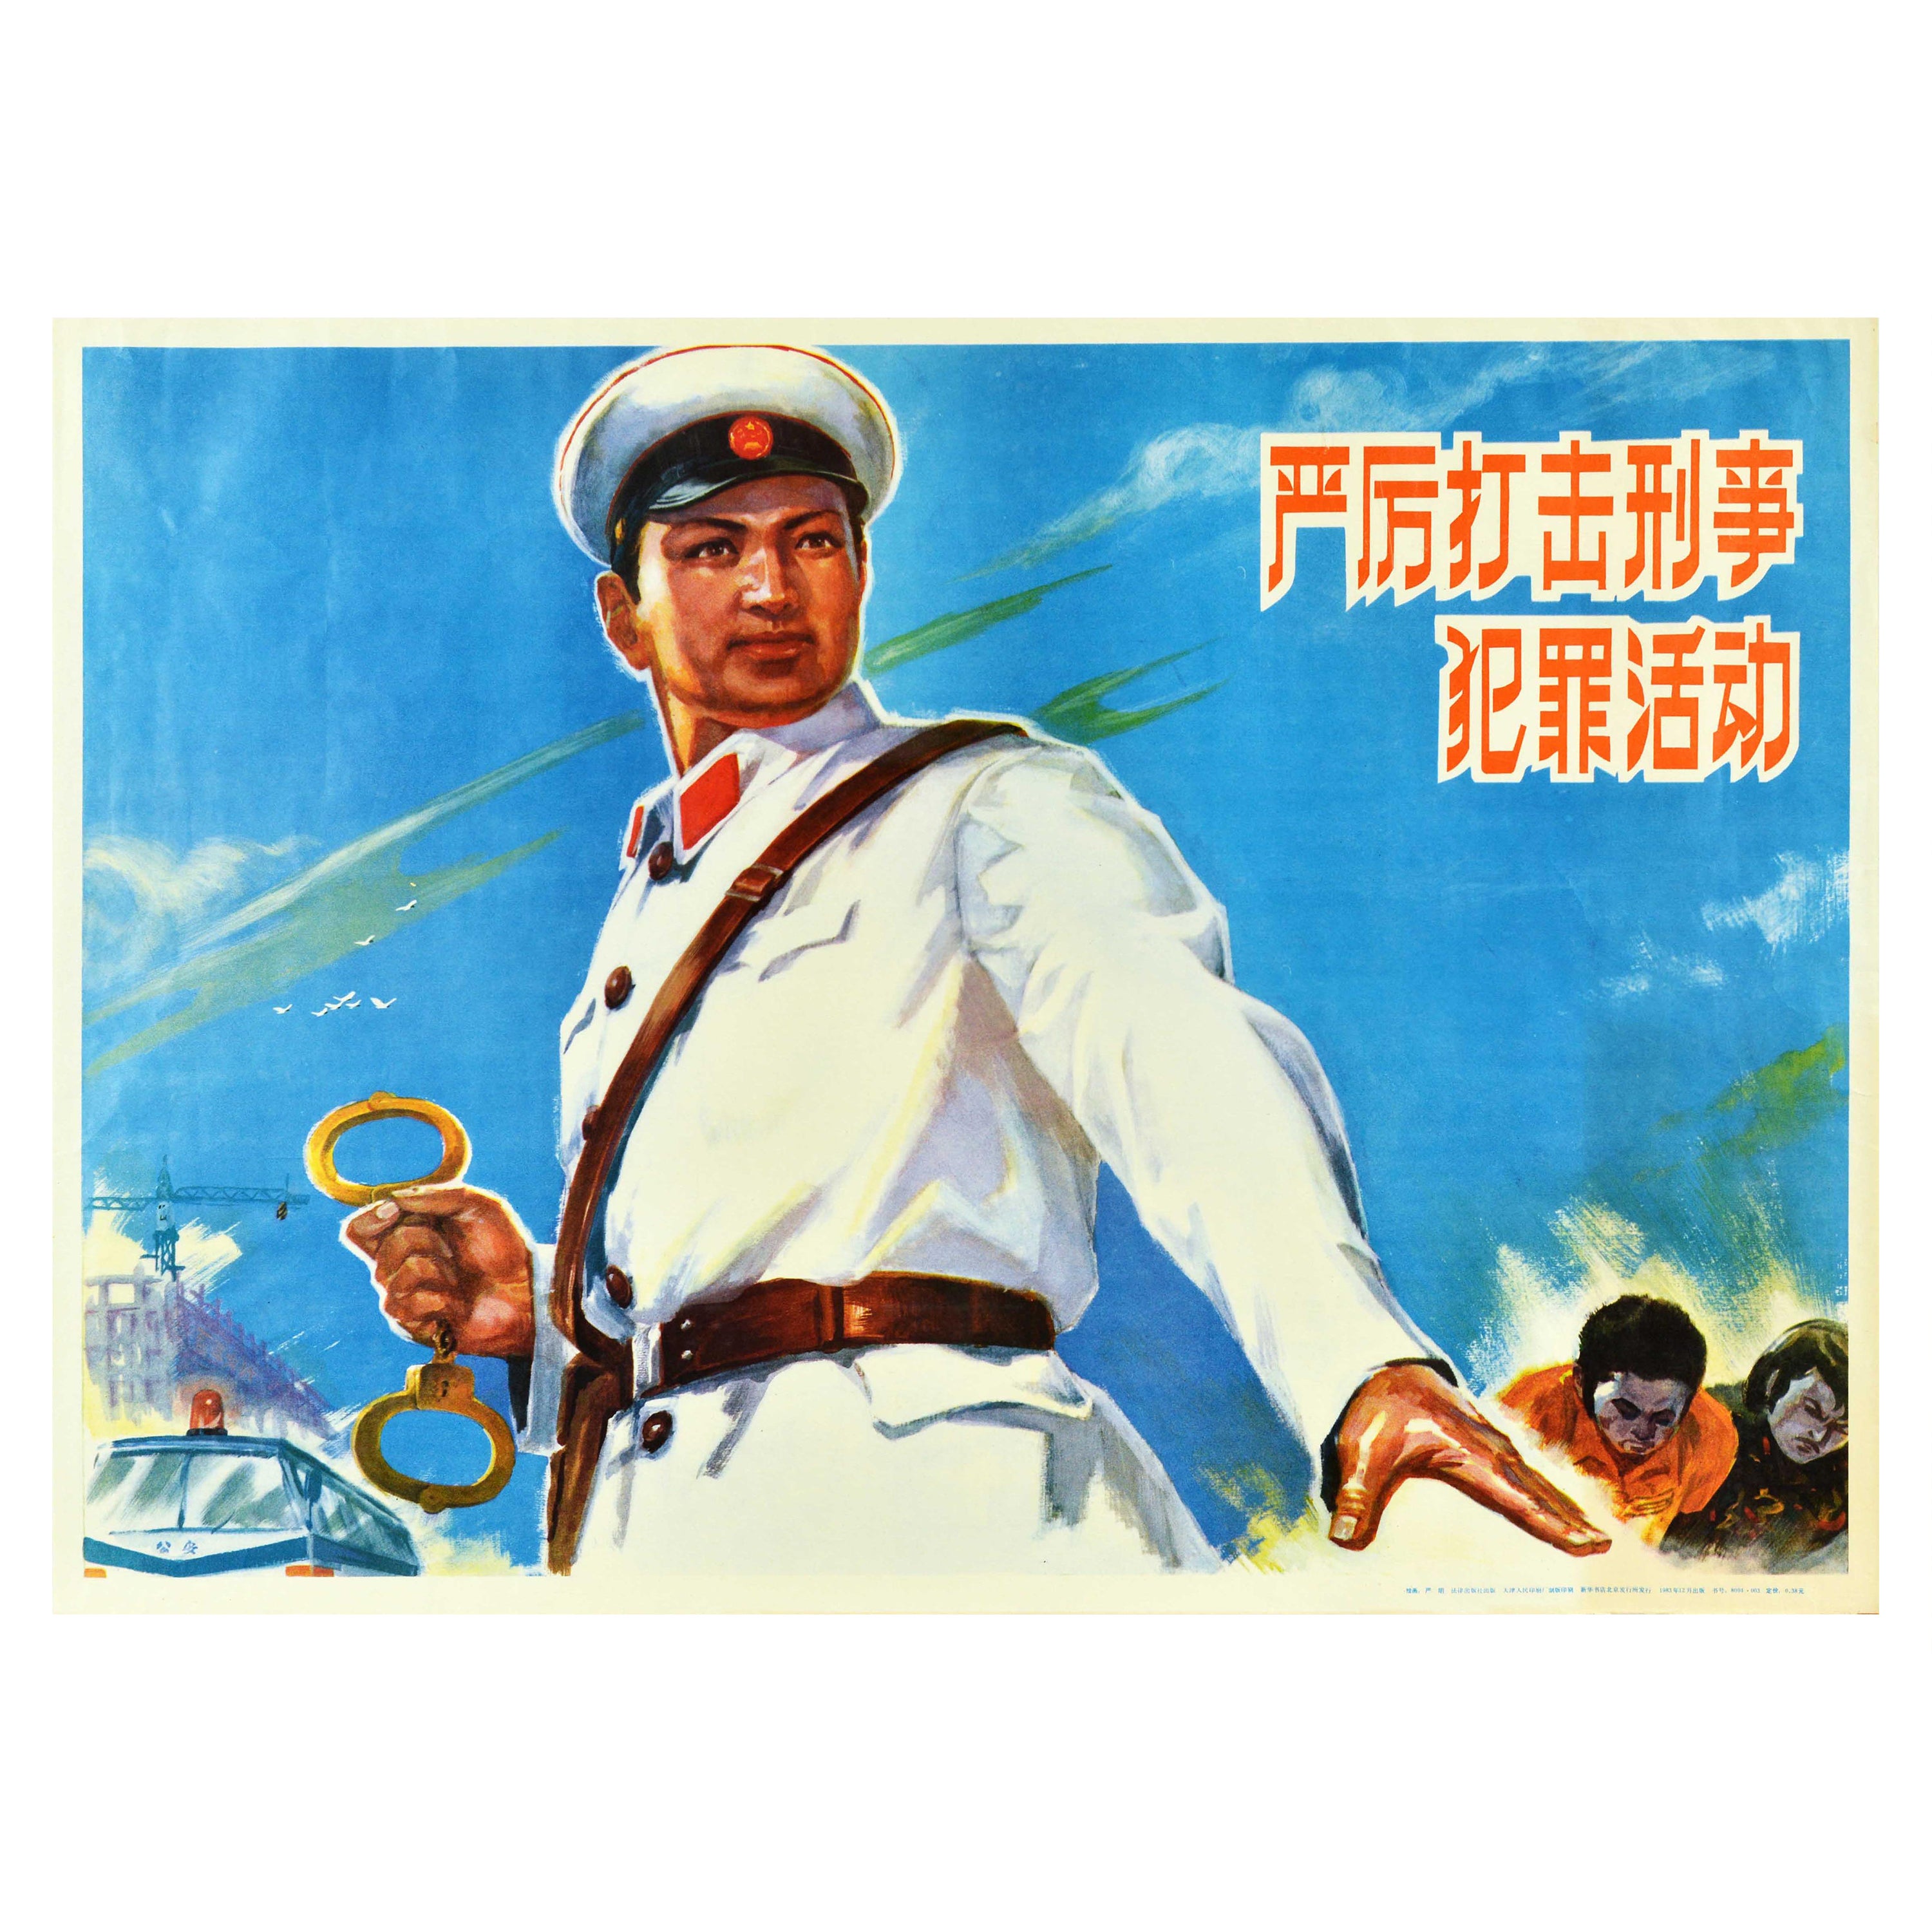 Original Vintage Propaganda Poster Criminal Activity Crackdown Law Police China For Sale